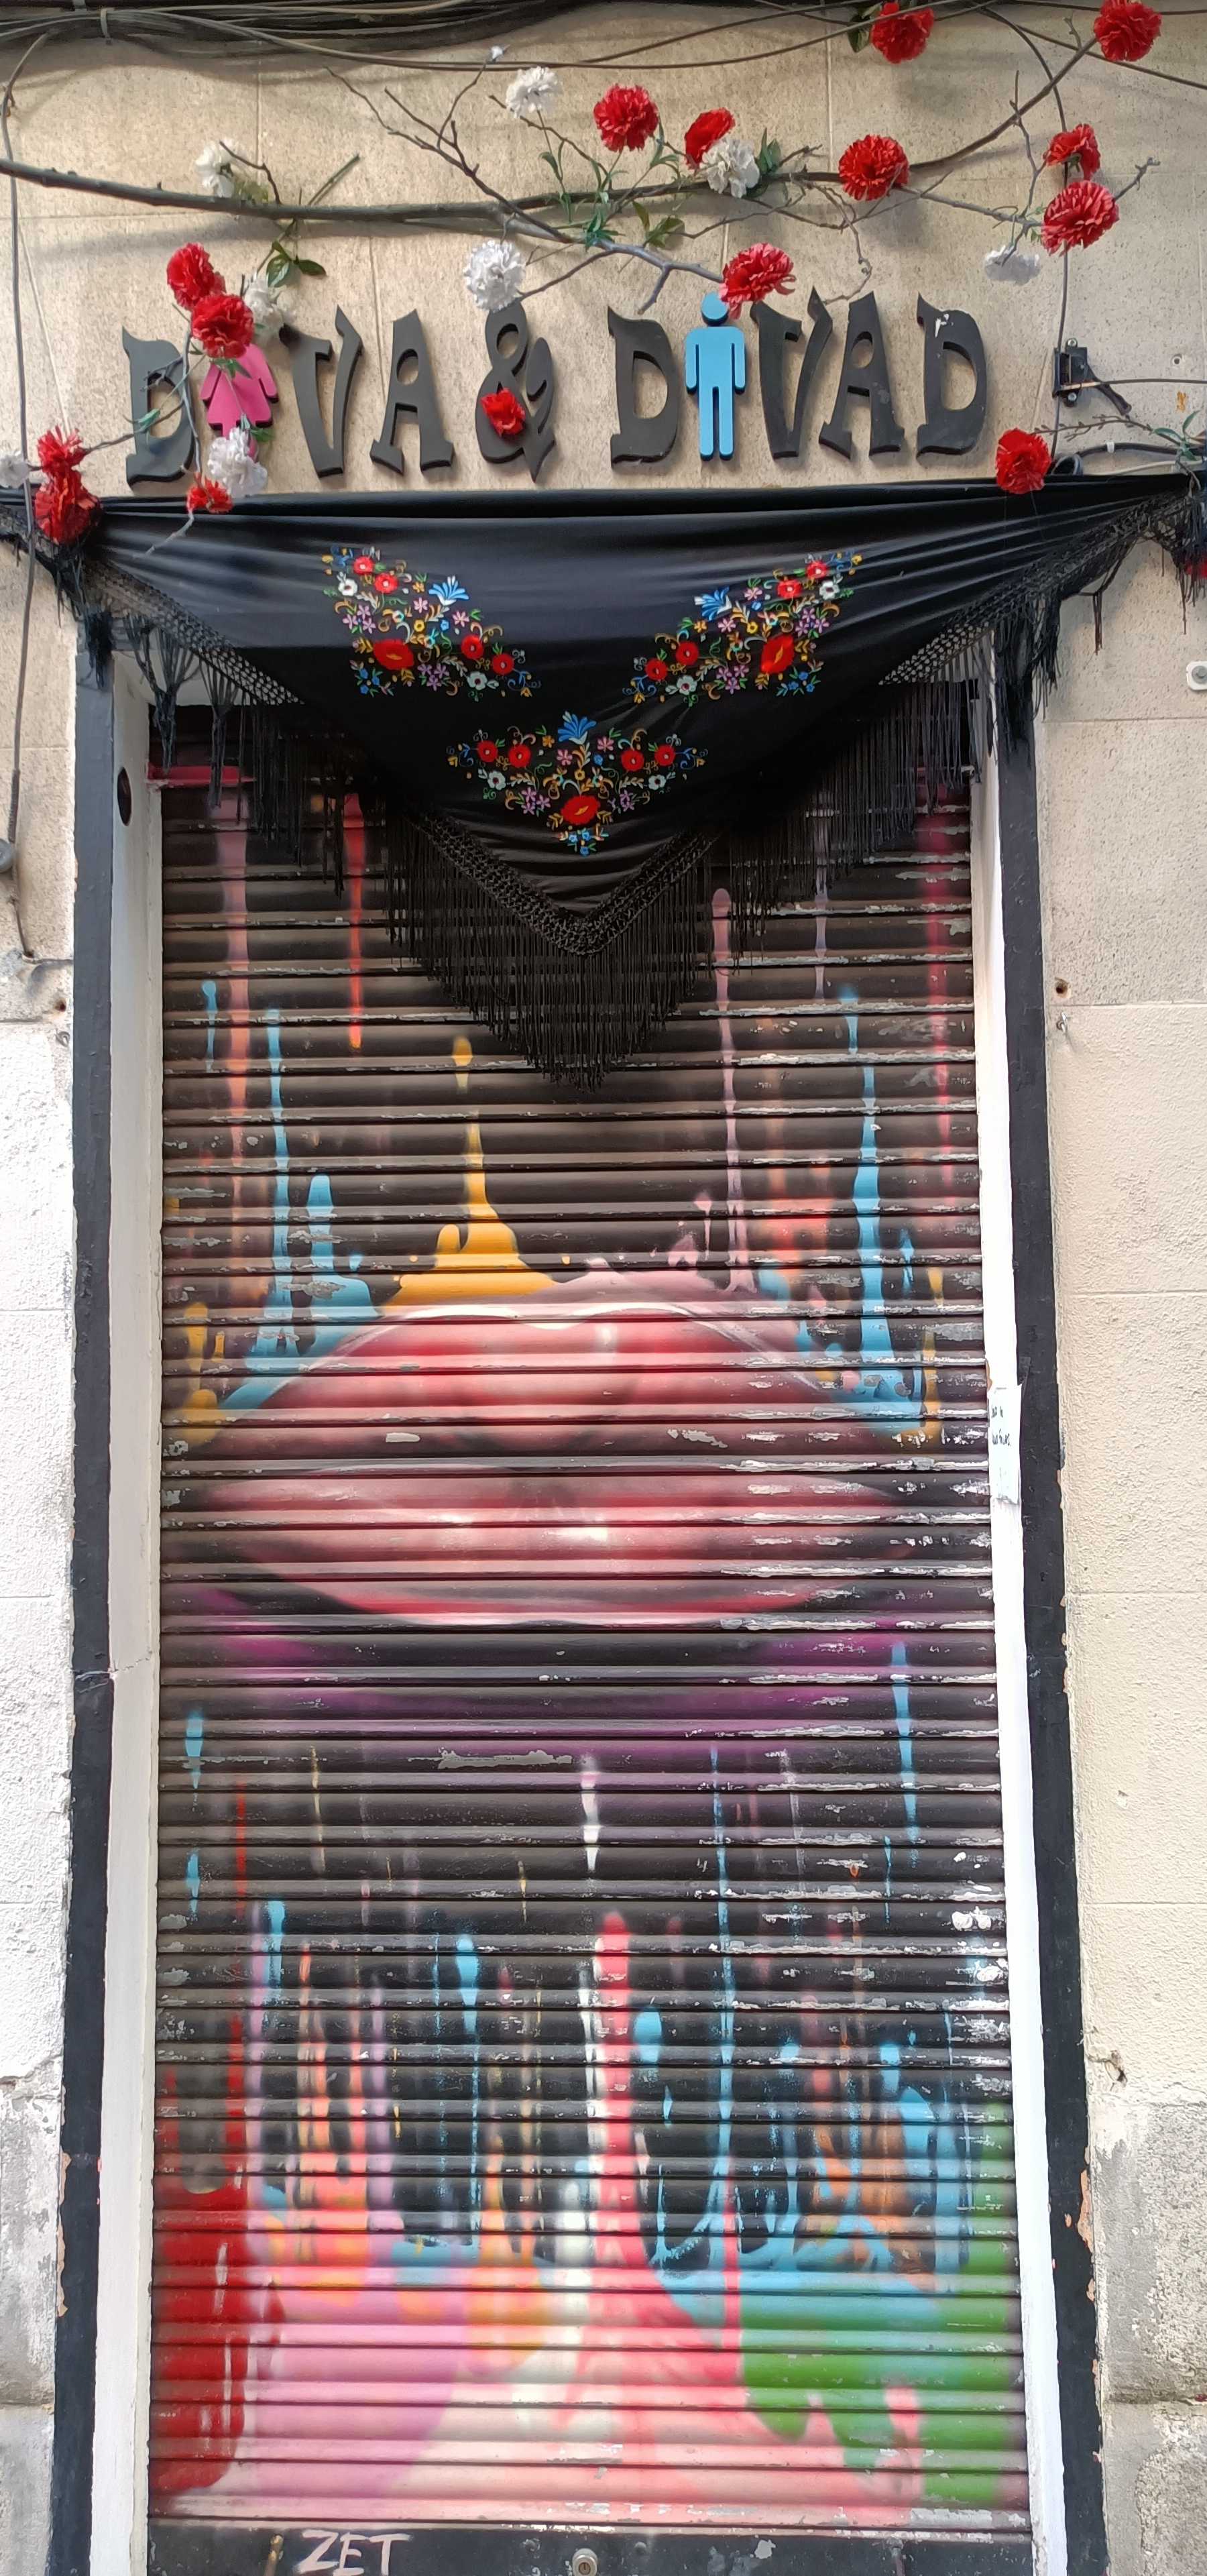 Graffiti 6751 Diva & divad captured by Rabot in Madrid Spain